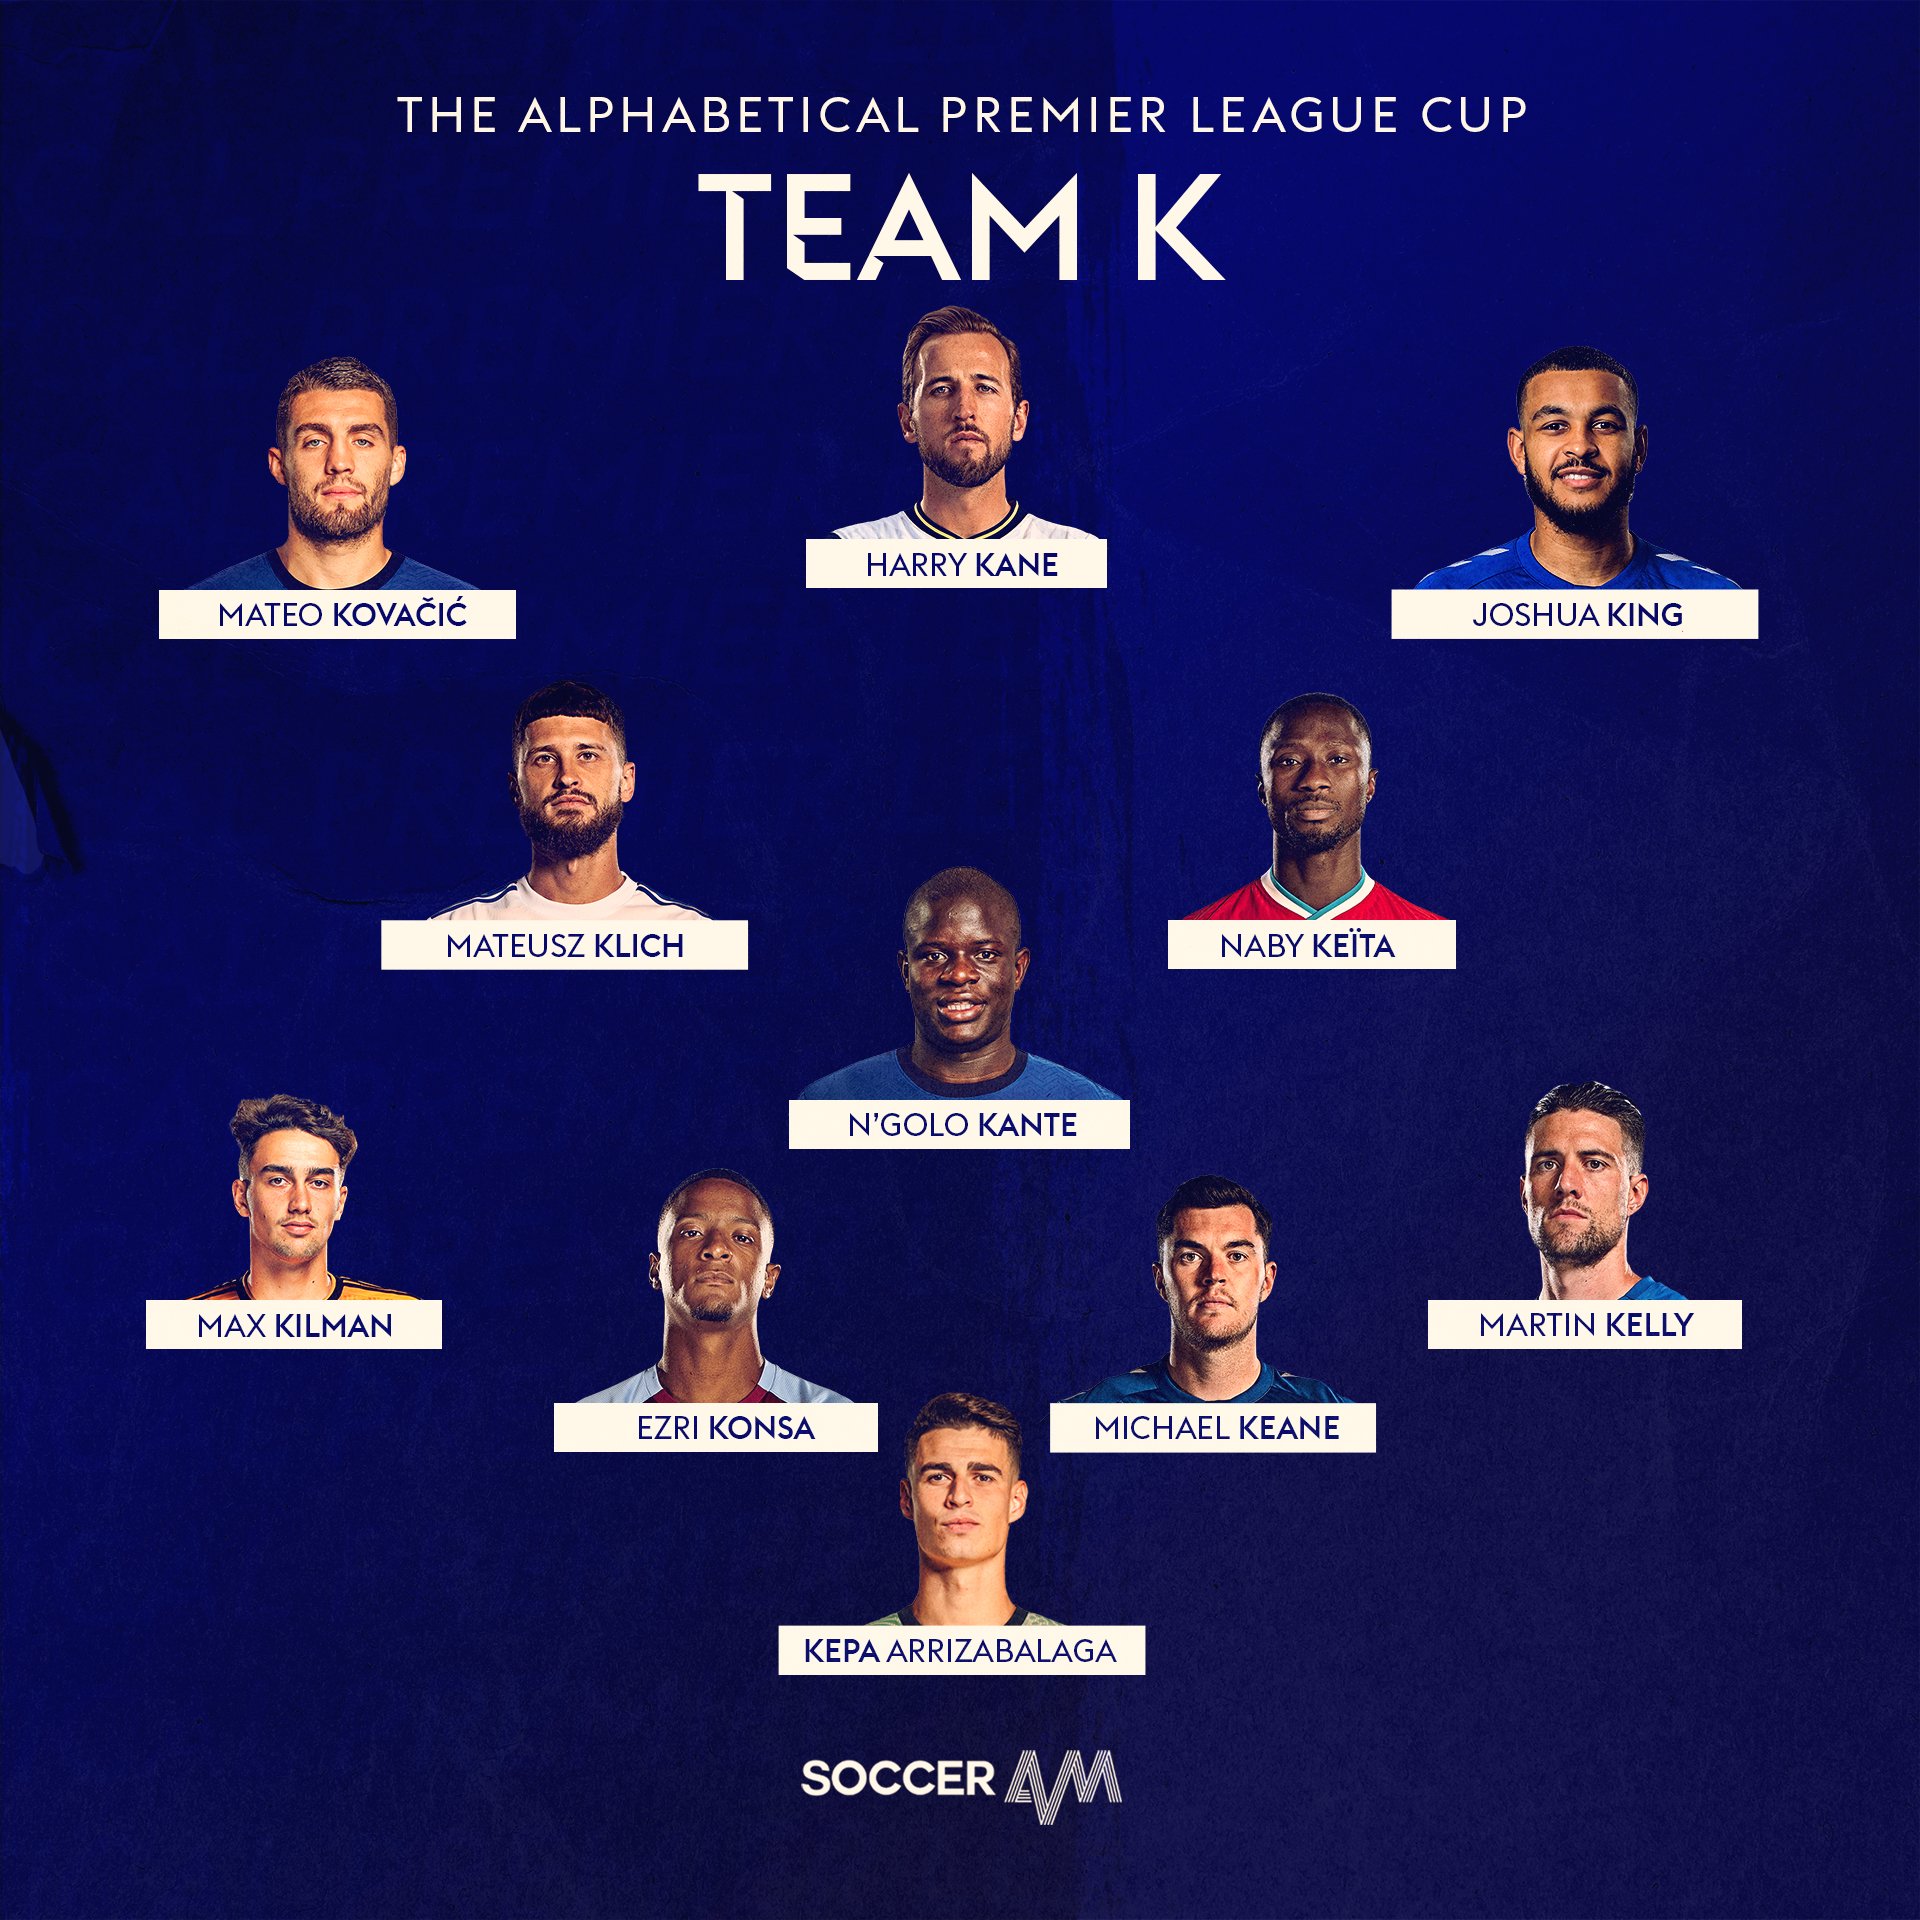 Soccer AM on Twitter: "The Alphabetical Premier League Cup 🏆  Quarter-Finals ⚽️ Team F vs Team K 🔠 Poll below 👇  https://t.co/OLq1PPYRus" / Twitter